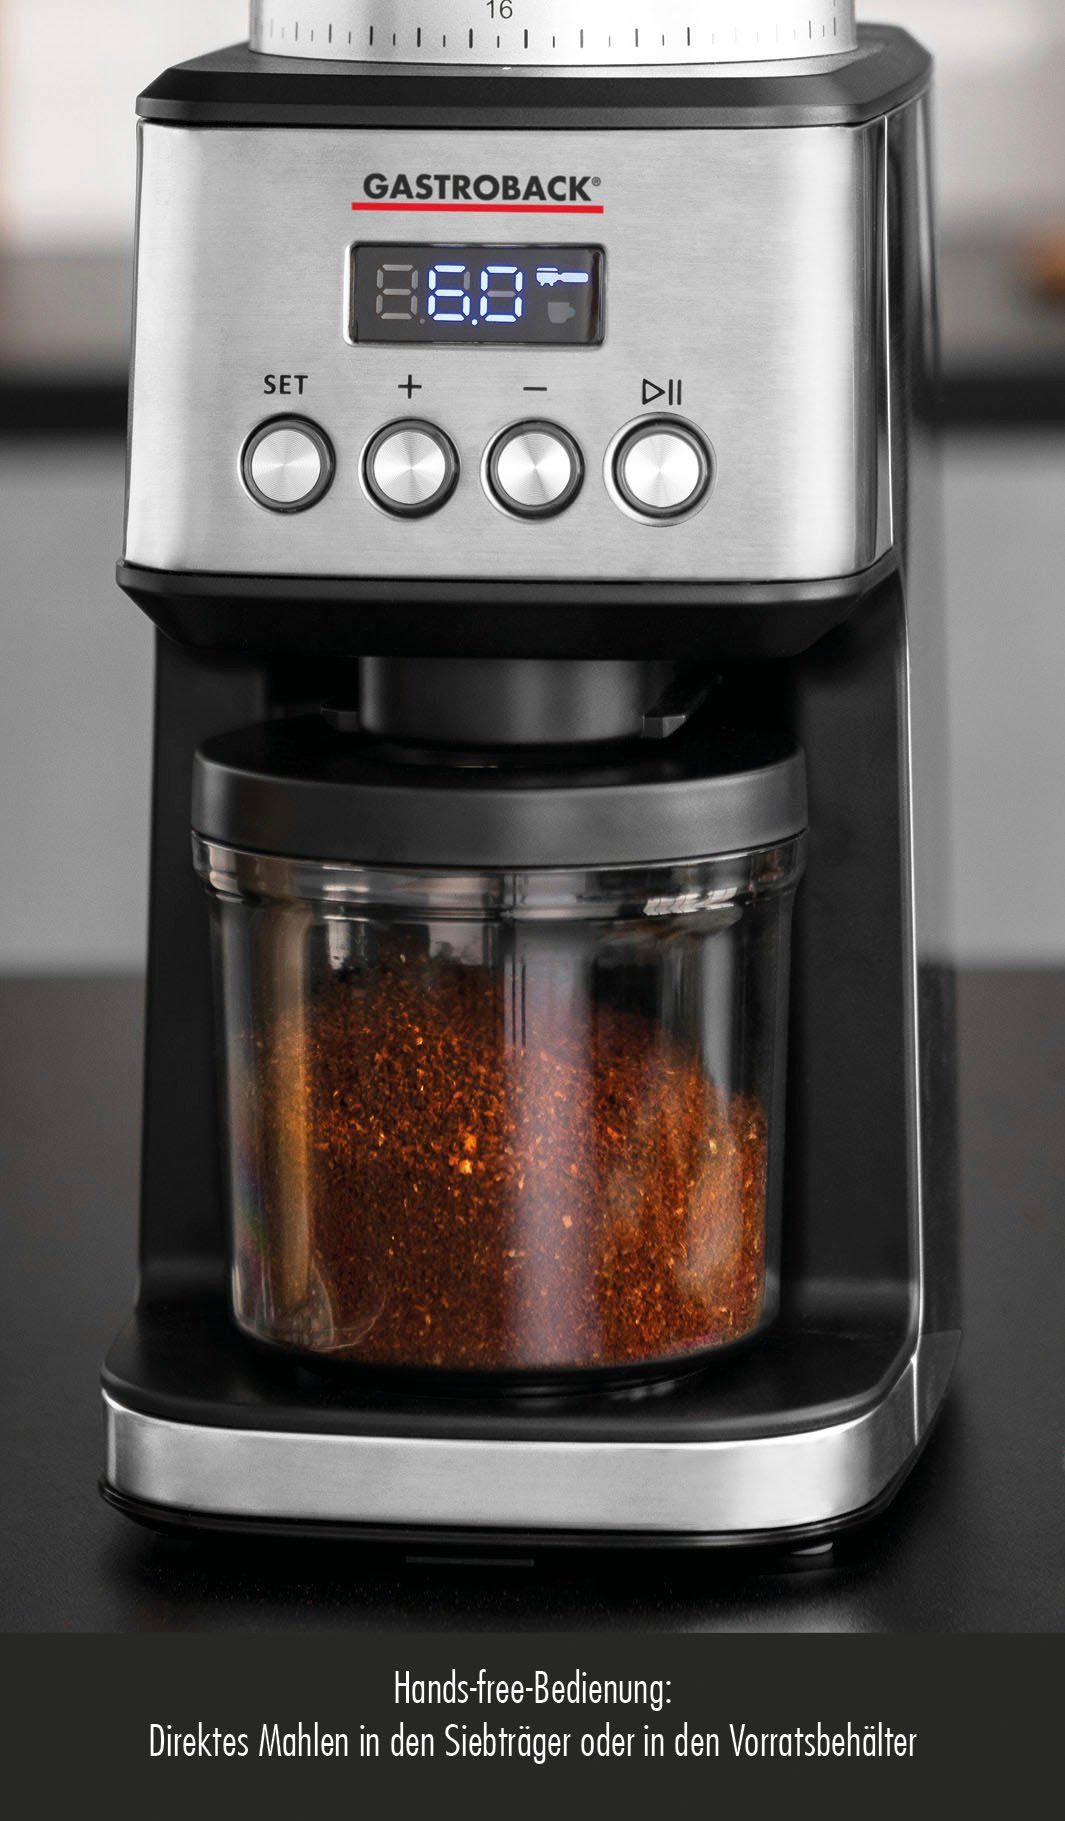 Kaffeemühle Kegelmahlwerk, 42643 320 Design Bohnenbehälter Gastroback 180 g Digital, W,